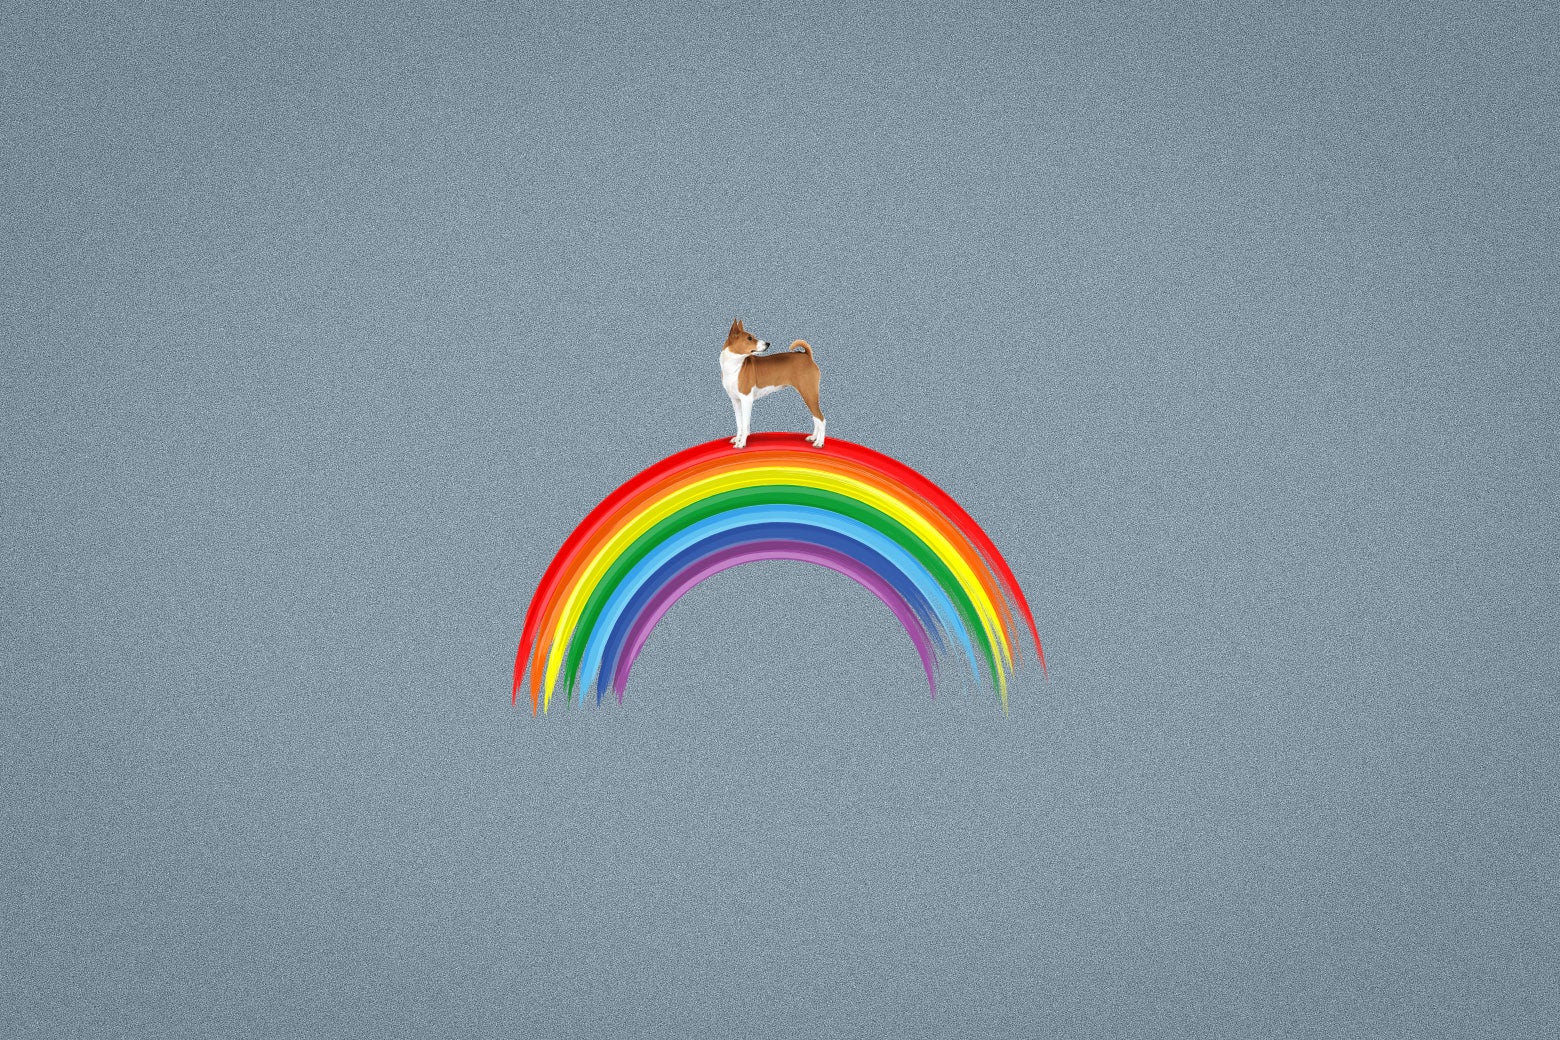 Personalized Rainbow Bridge Memorial Dog Ornament